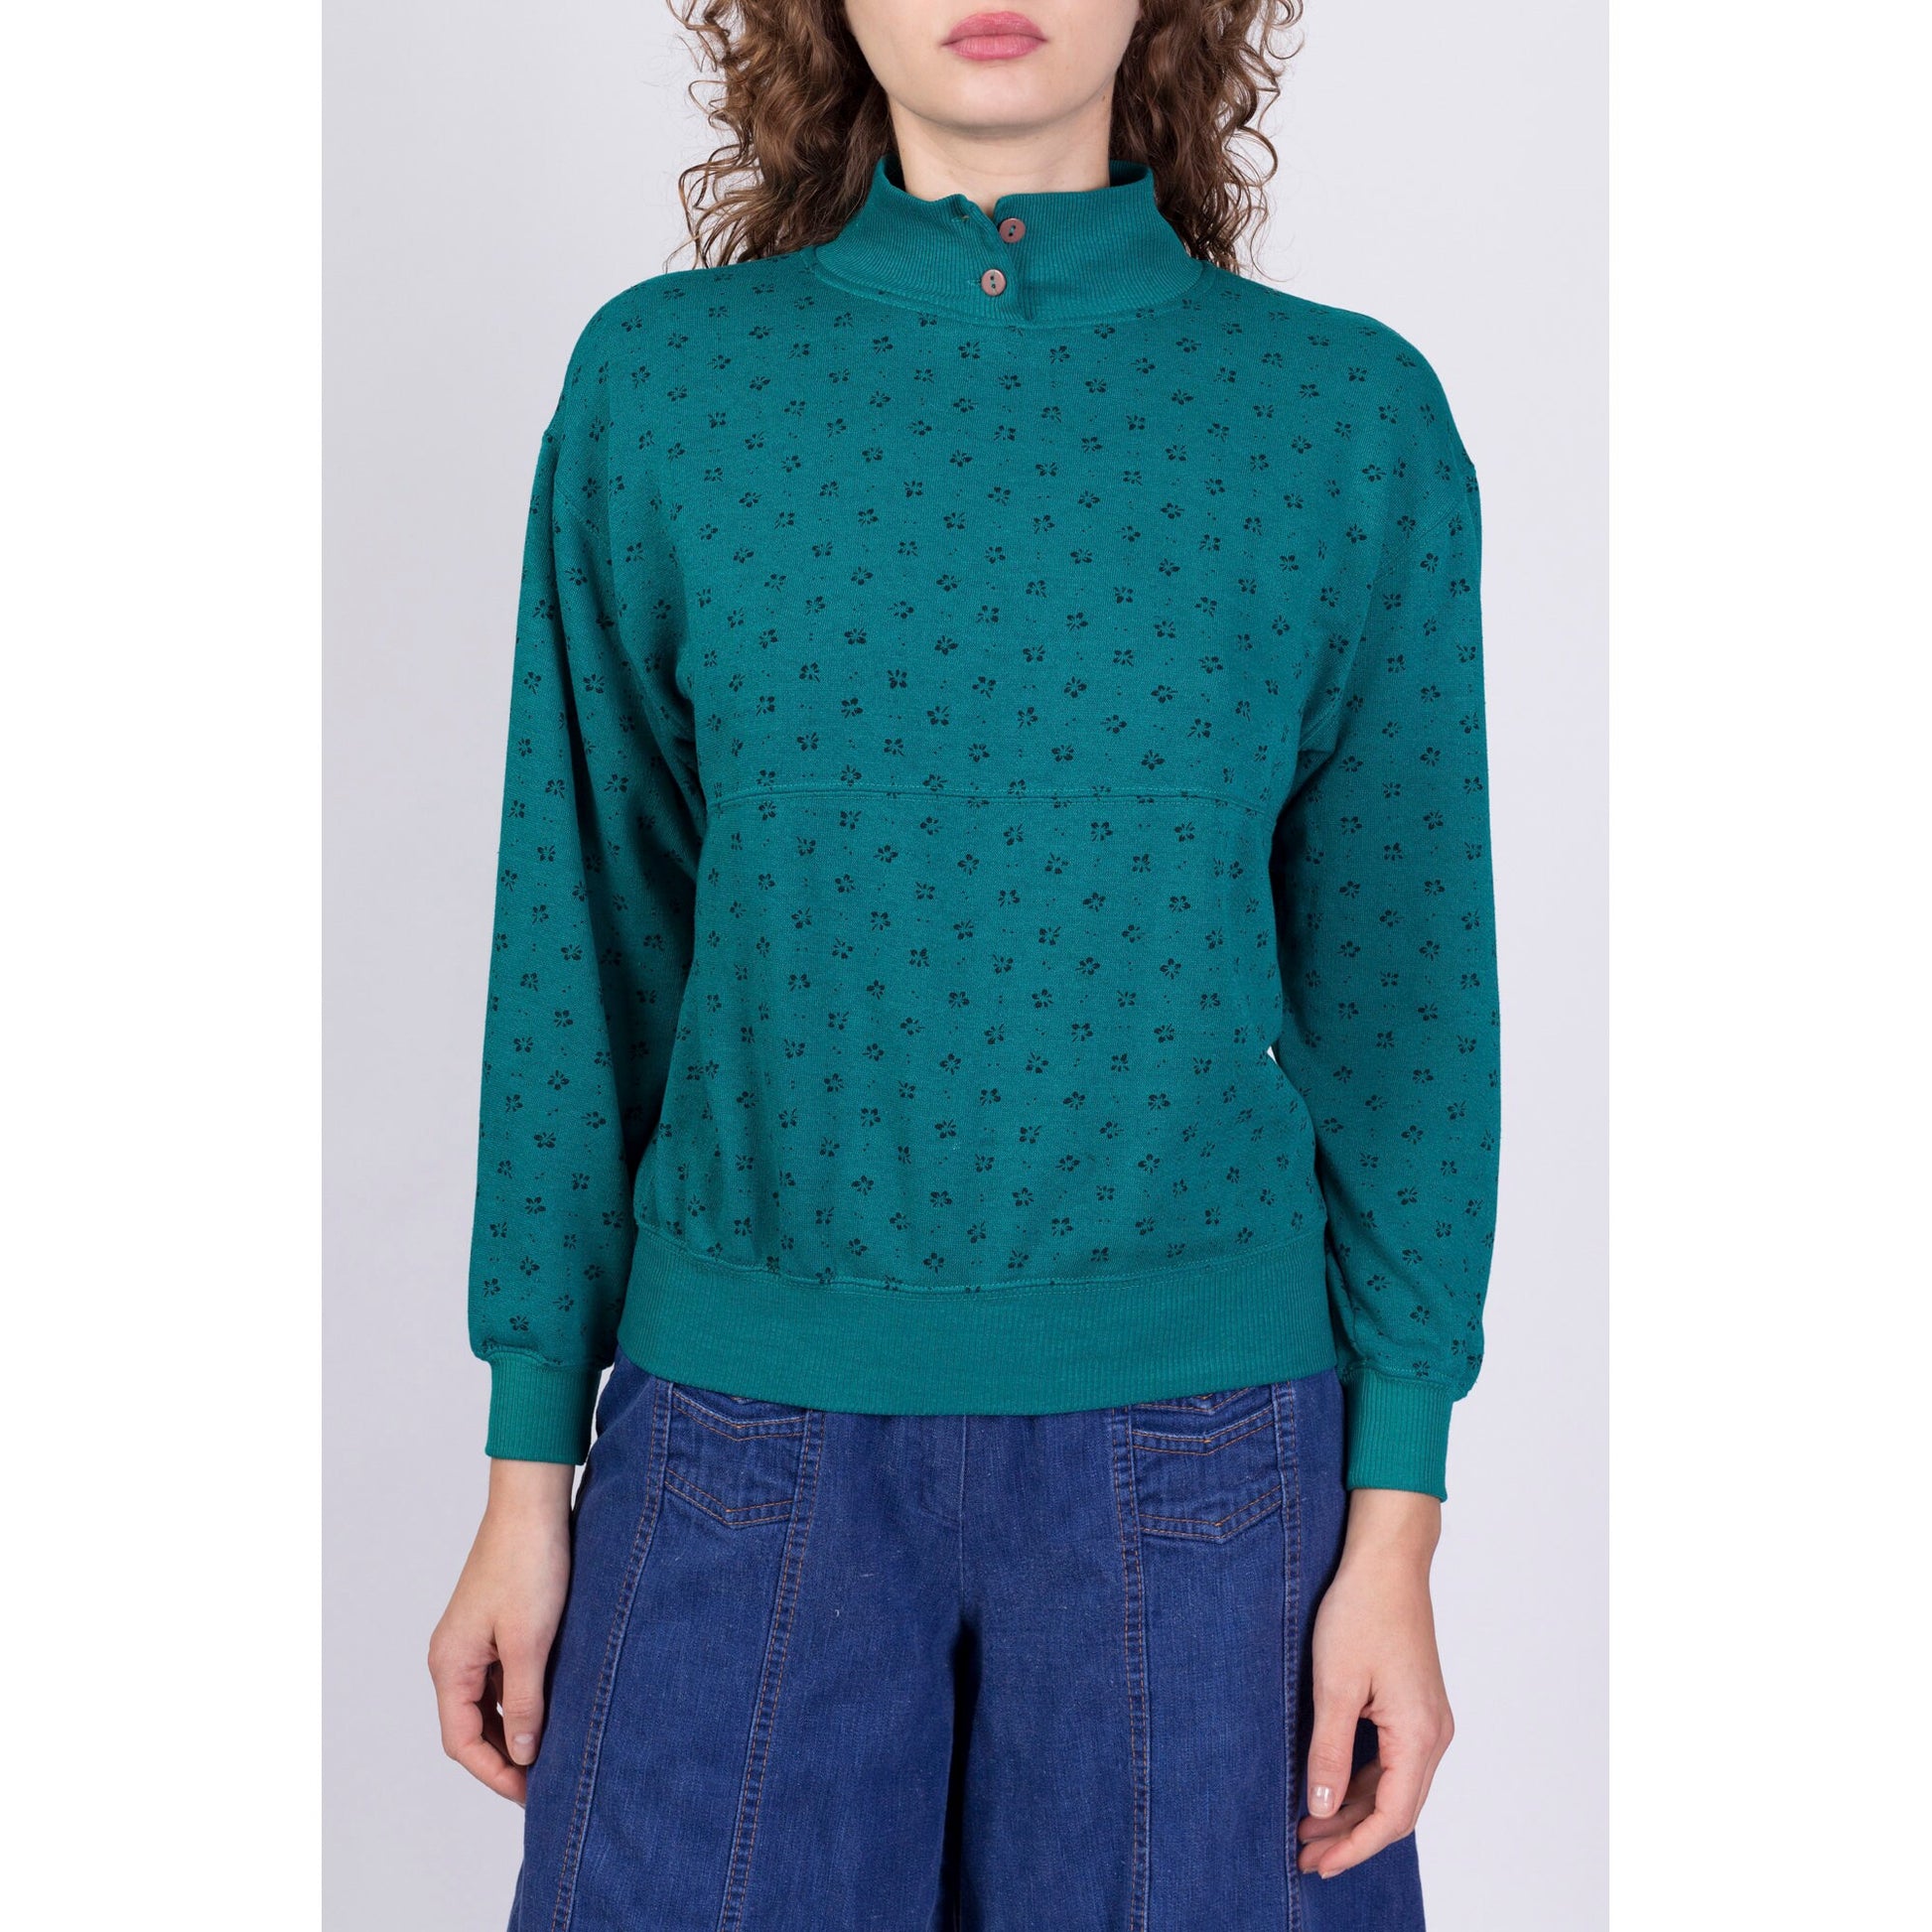 80s Teal Floral Mockneck Sweatshirt - Petite Small 